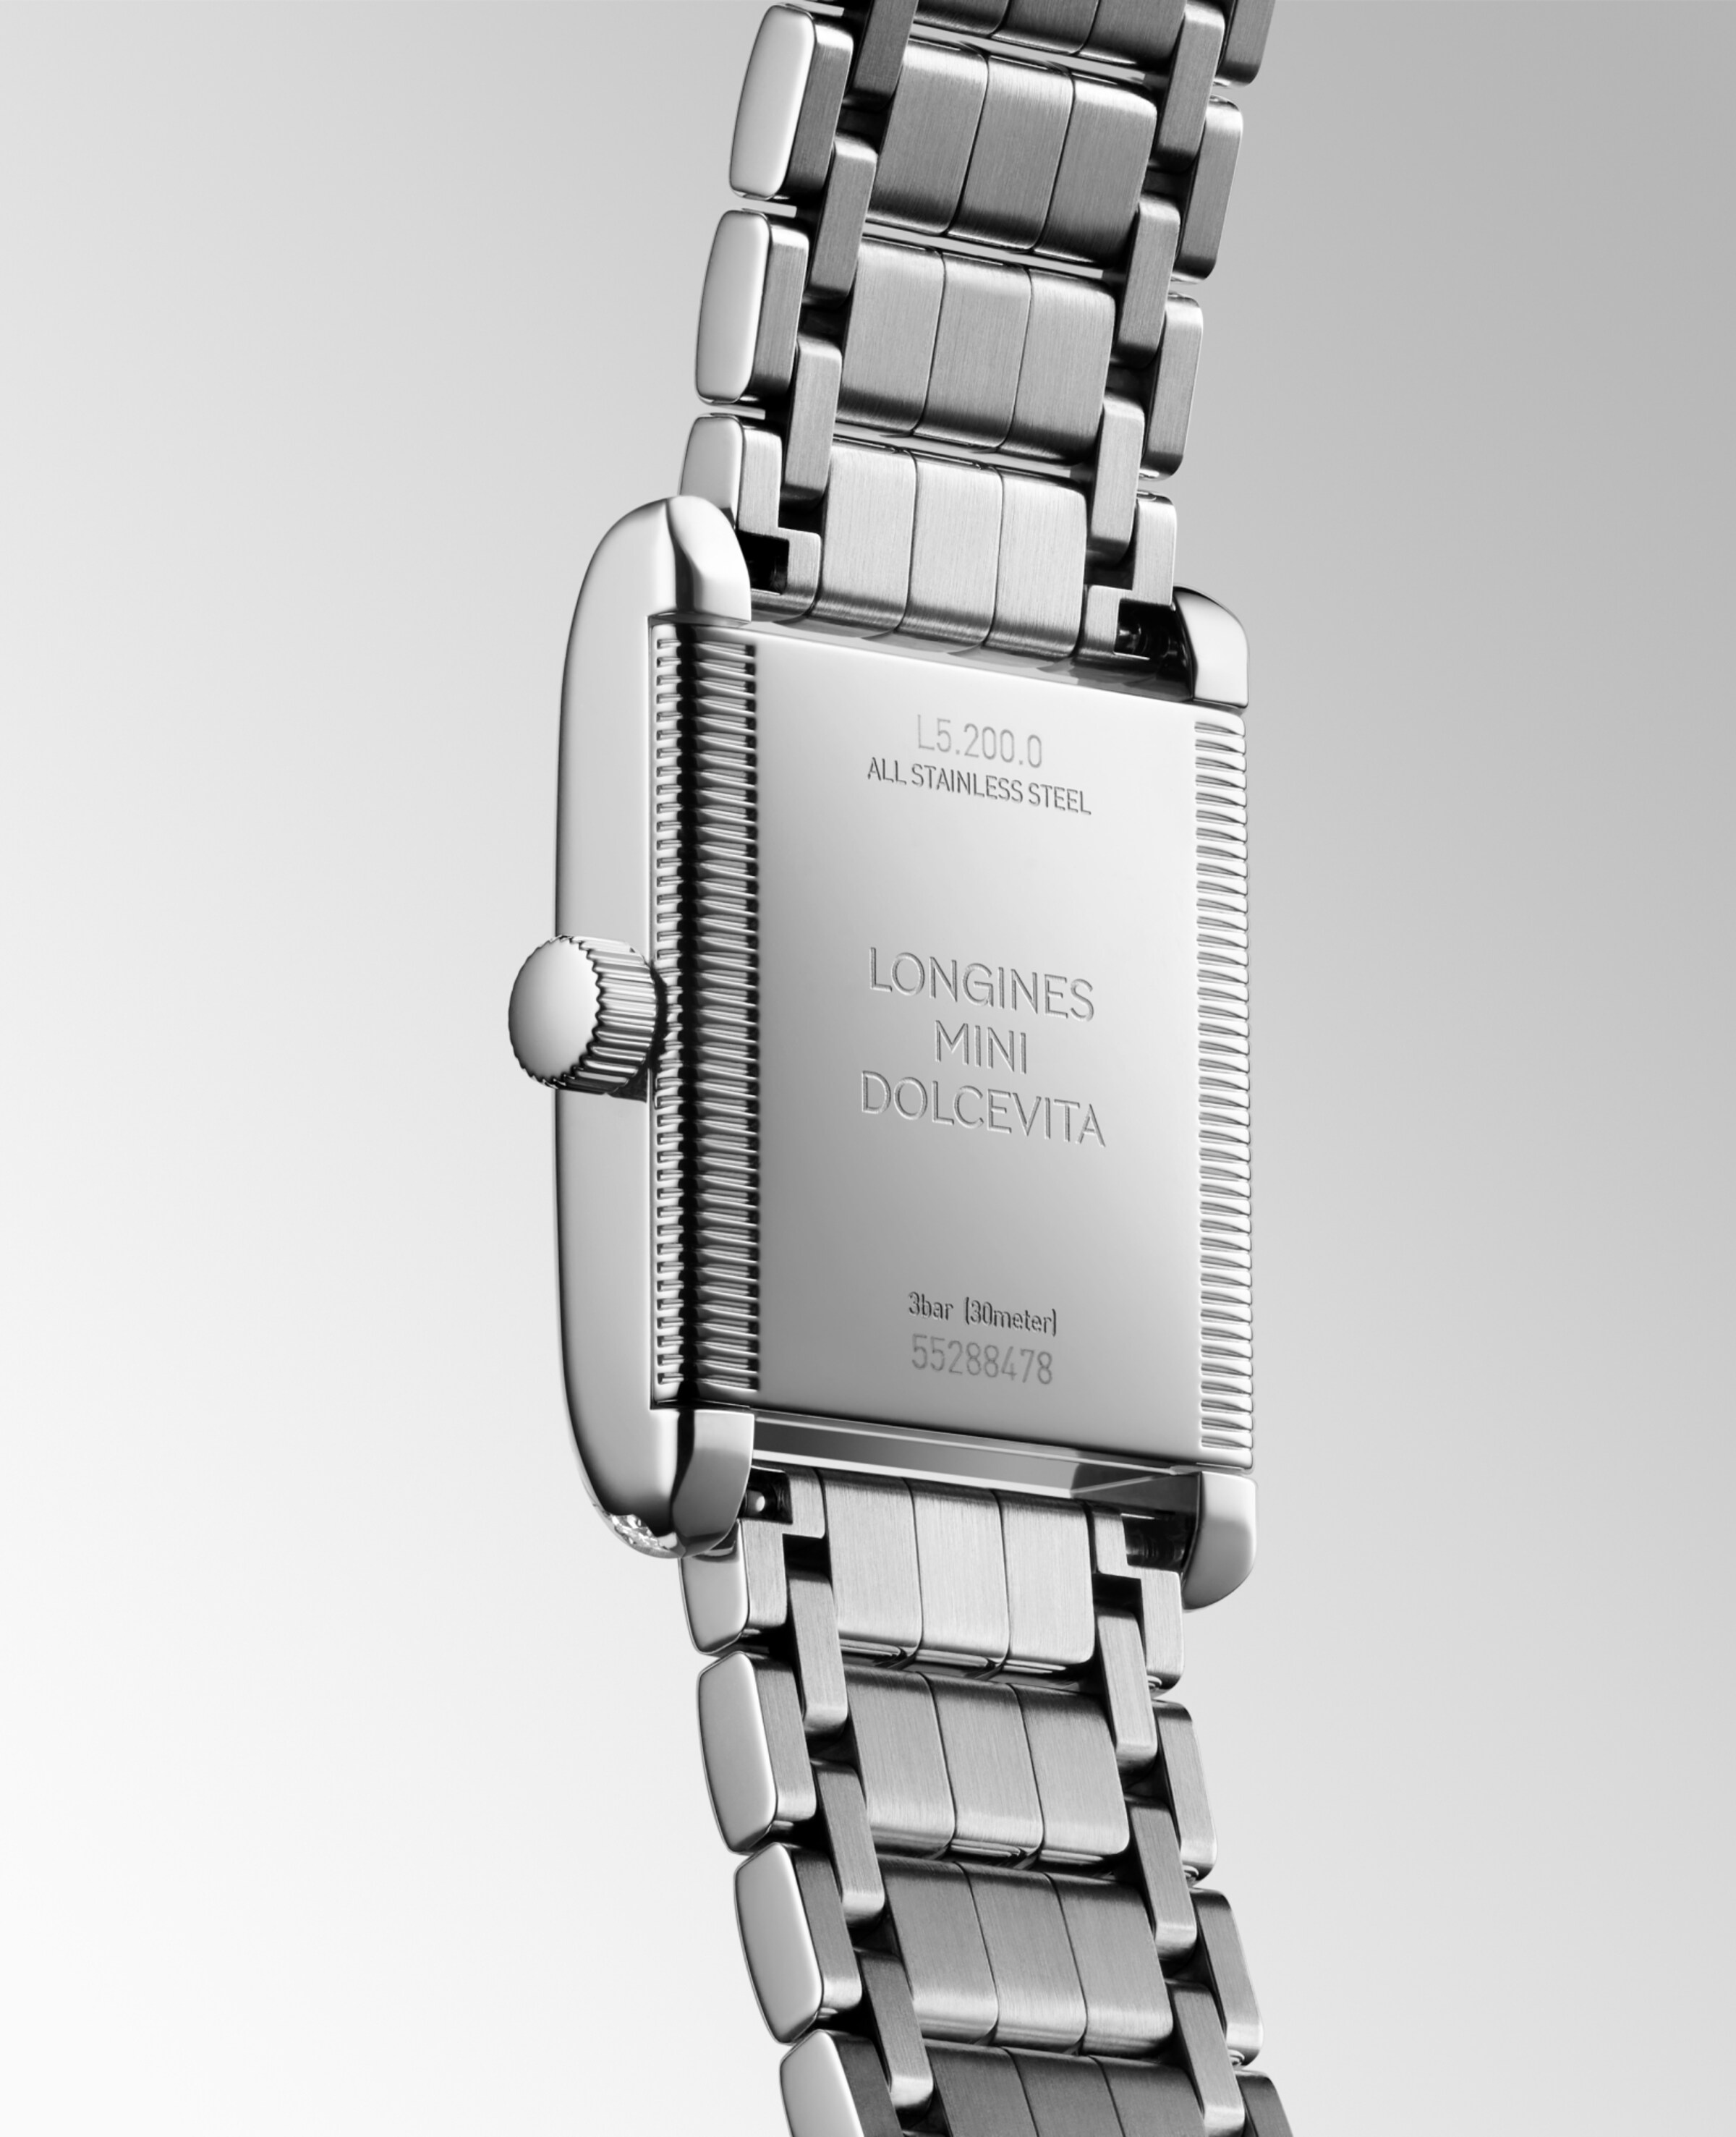 Longines MINI DOLCEVITA Quartz Stainless steel Watch - L5.200.0.75.6